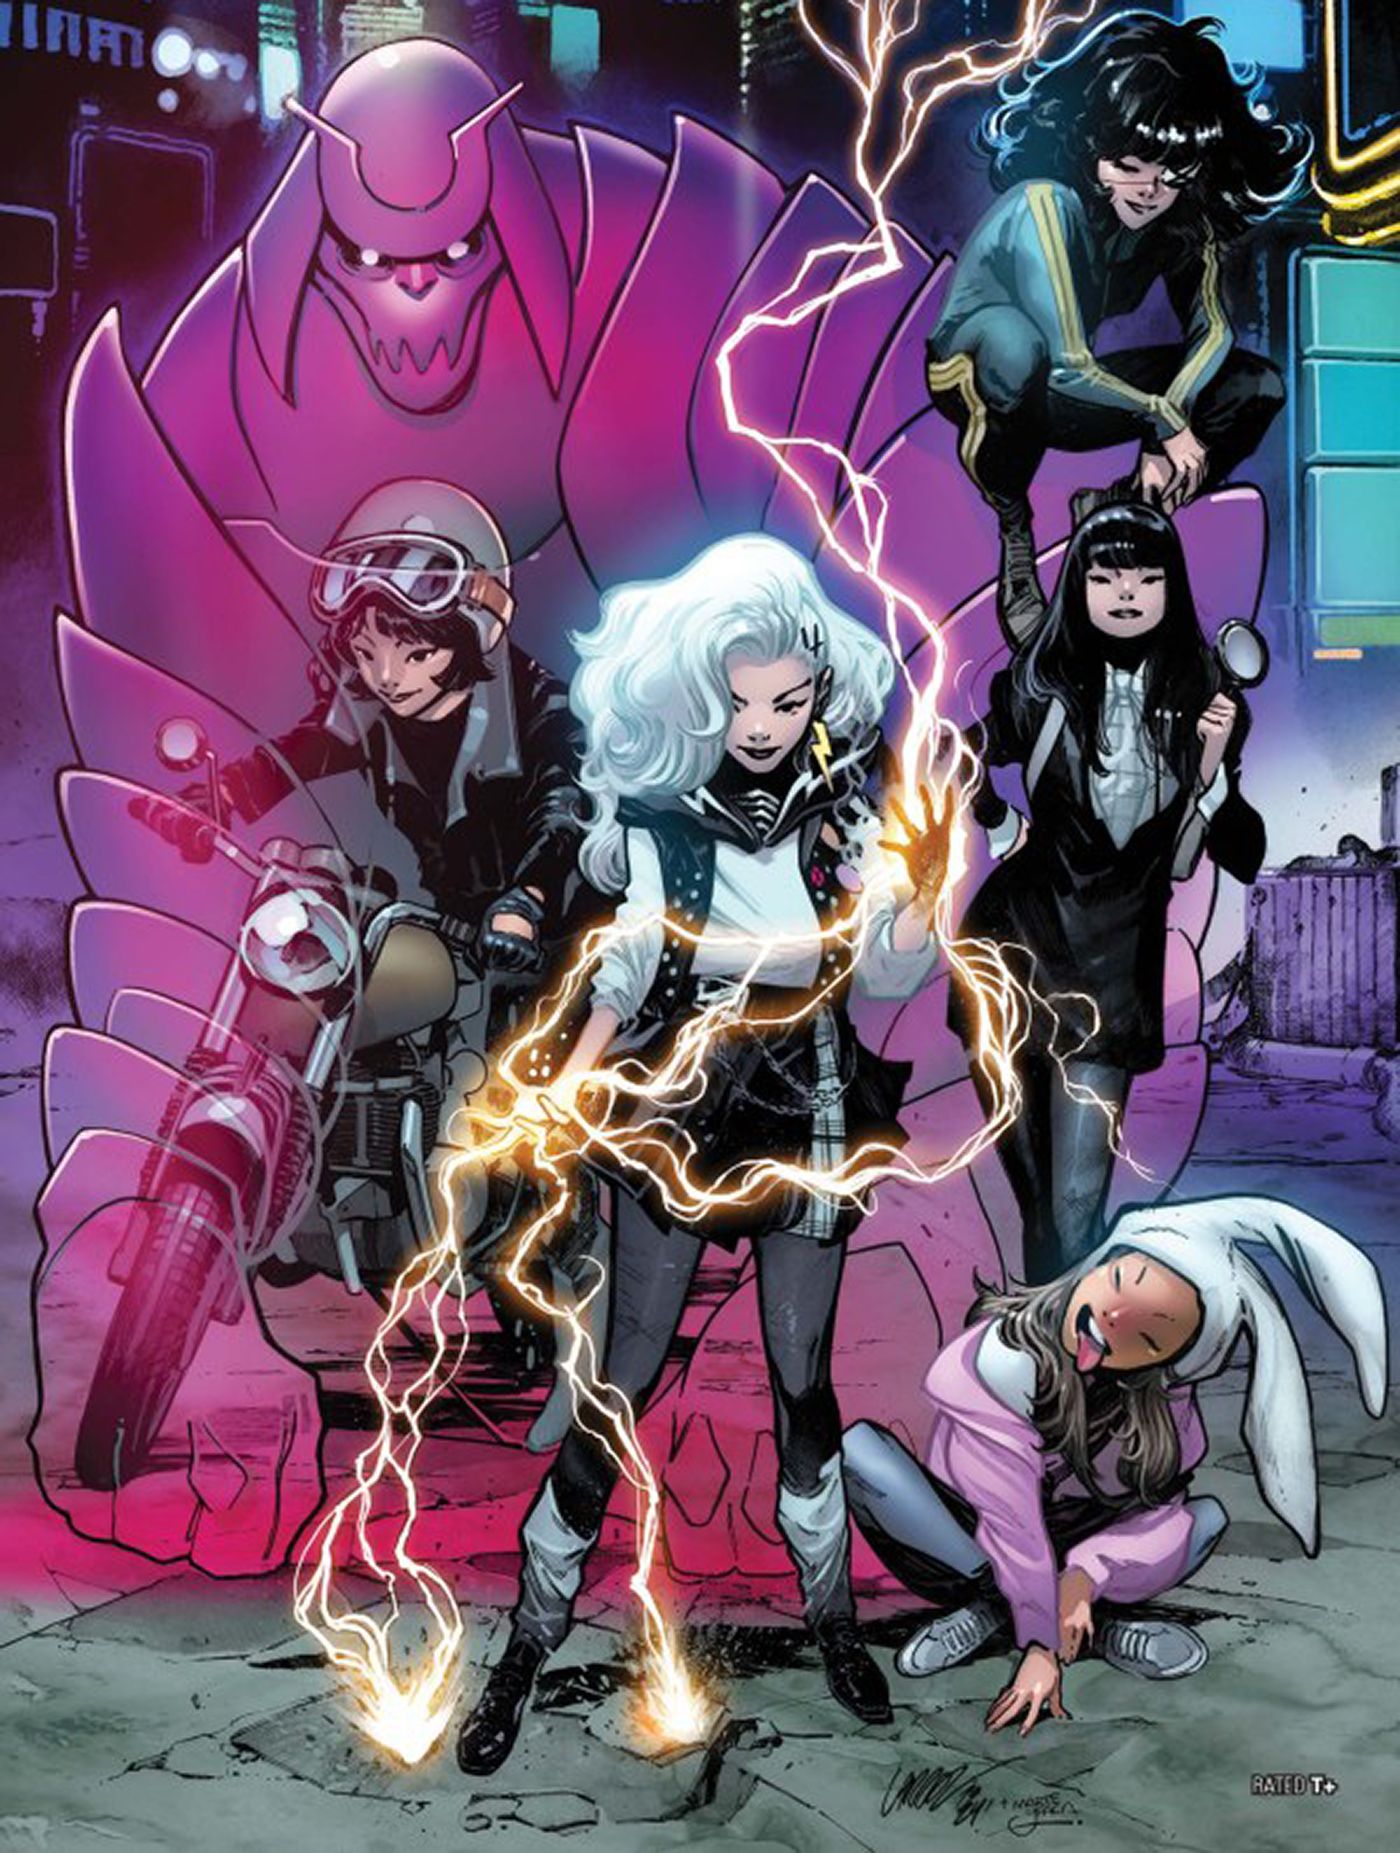 Capa variante de Ultimate X-Men #5 Pepe Larraz com Armor, Maystorm, Nico Minoru, Cyclops e Mori.